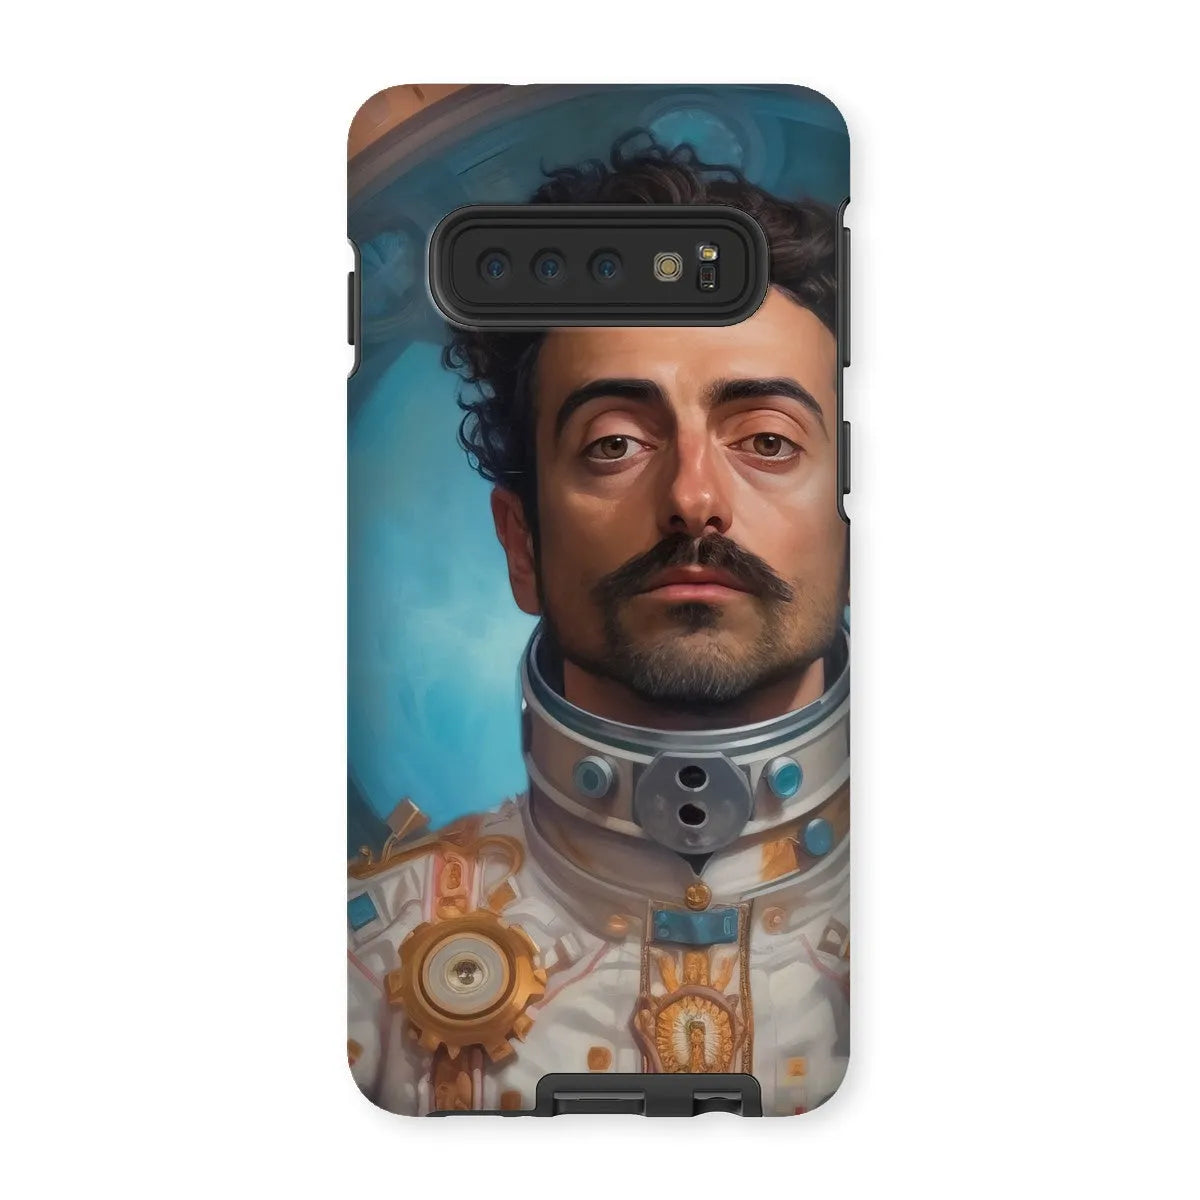 Eskandar The Gay Astronaut - Gay Aesthetic Art Phone Case - Samsung Galaxy S10 / Matte - Mobile Phone Cases - Aesthetic